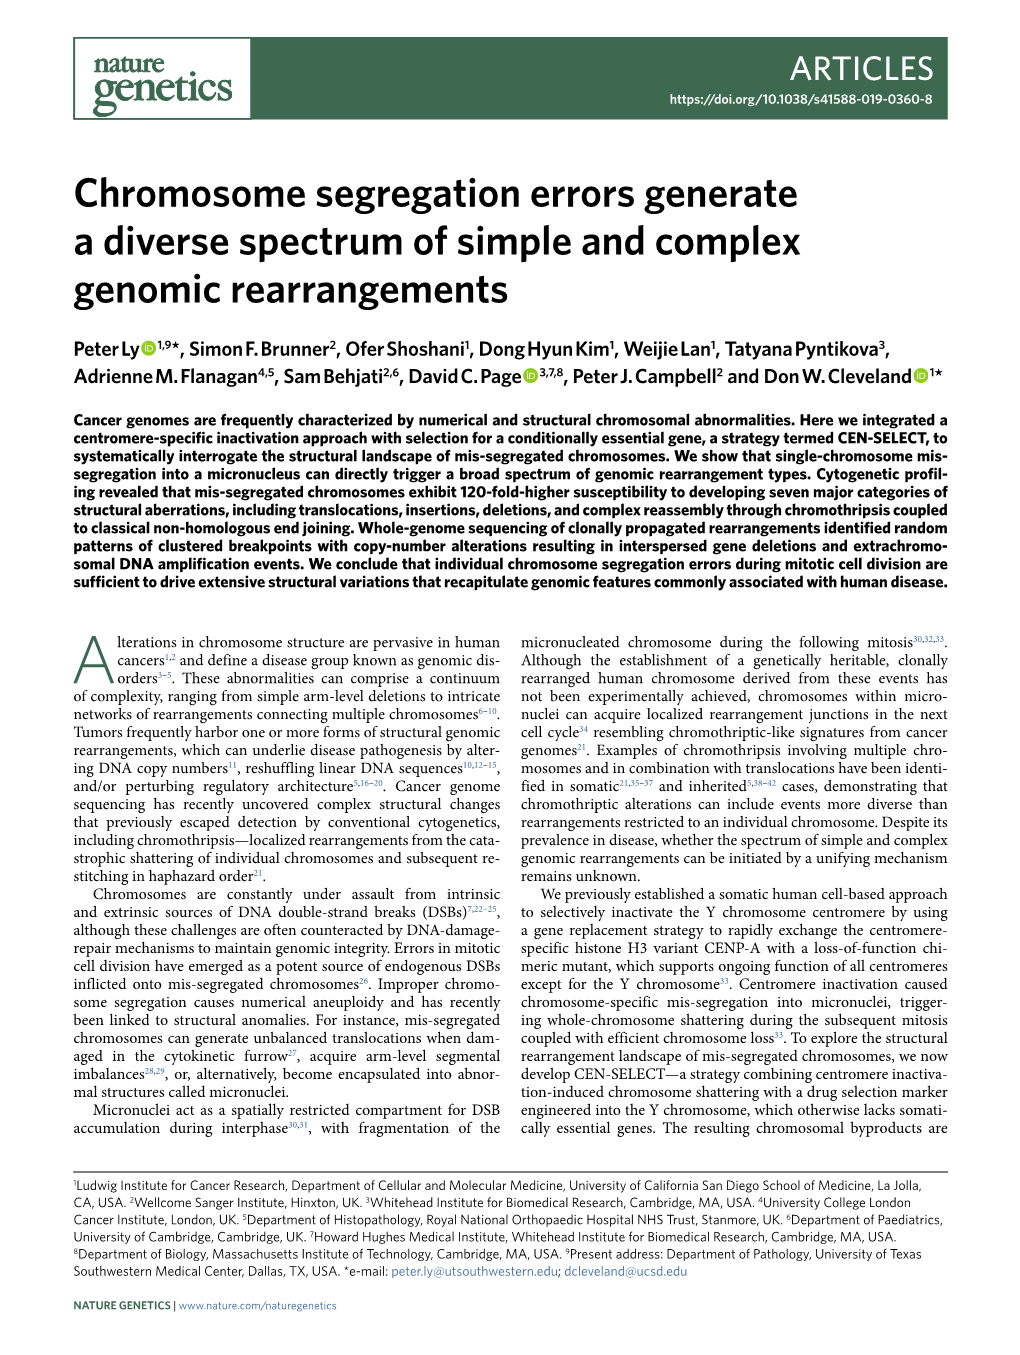 Chromosome Segregation Errors Generate a Diverse Spectrum of Simple and Complex Genomic Rearrangements